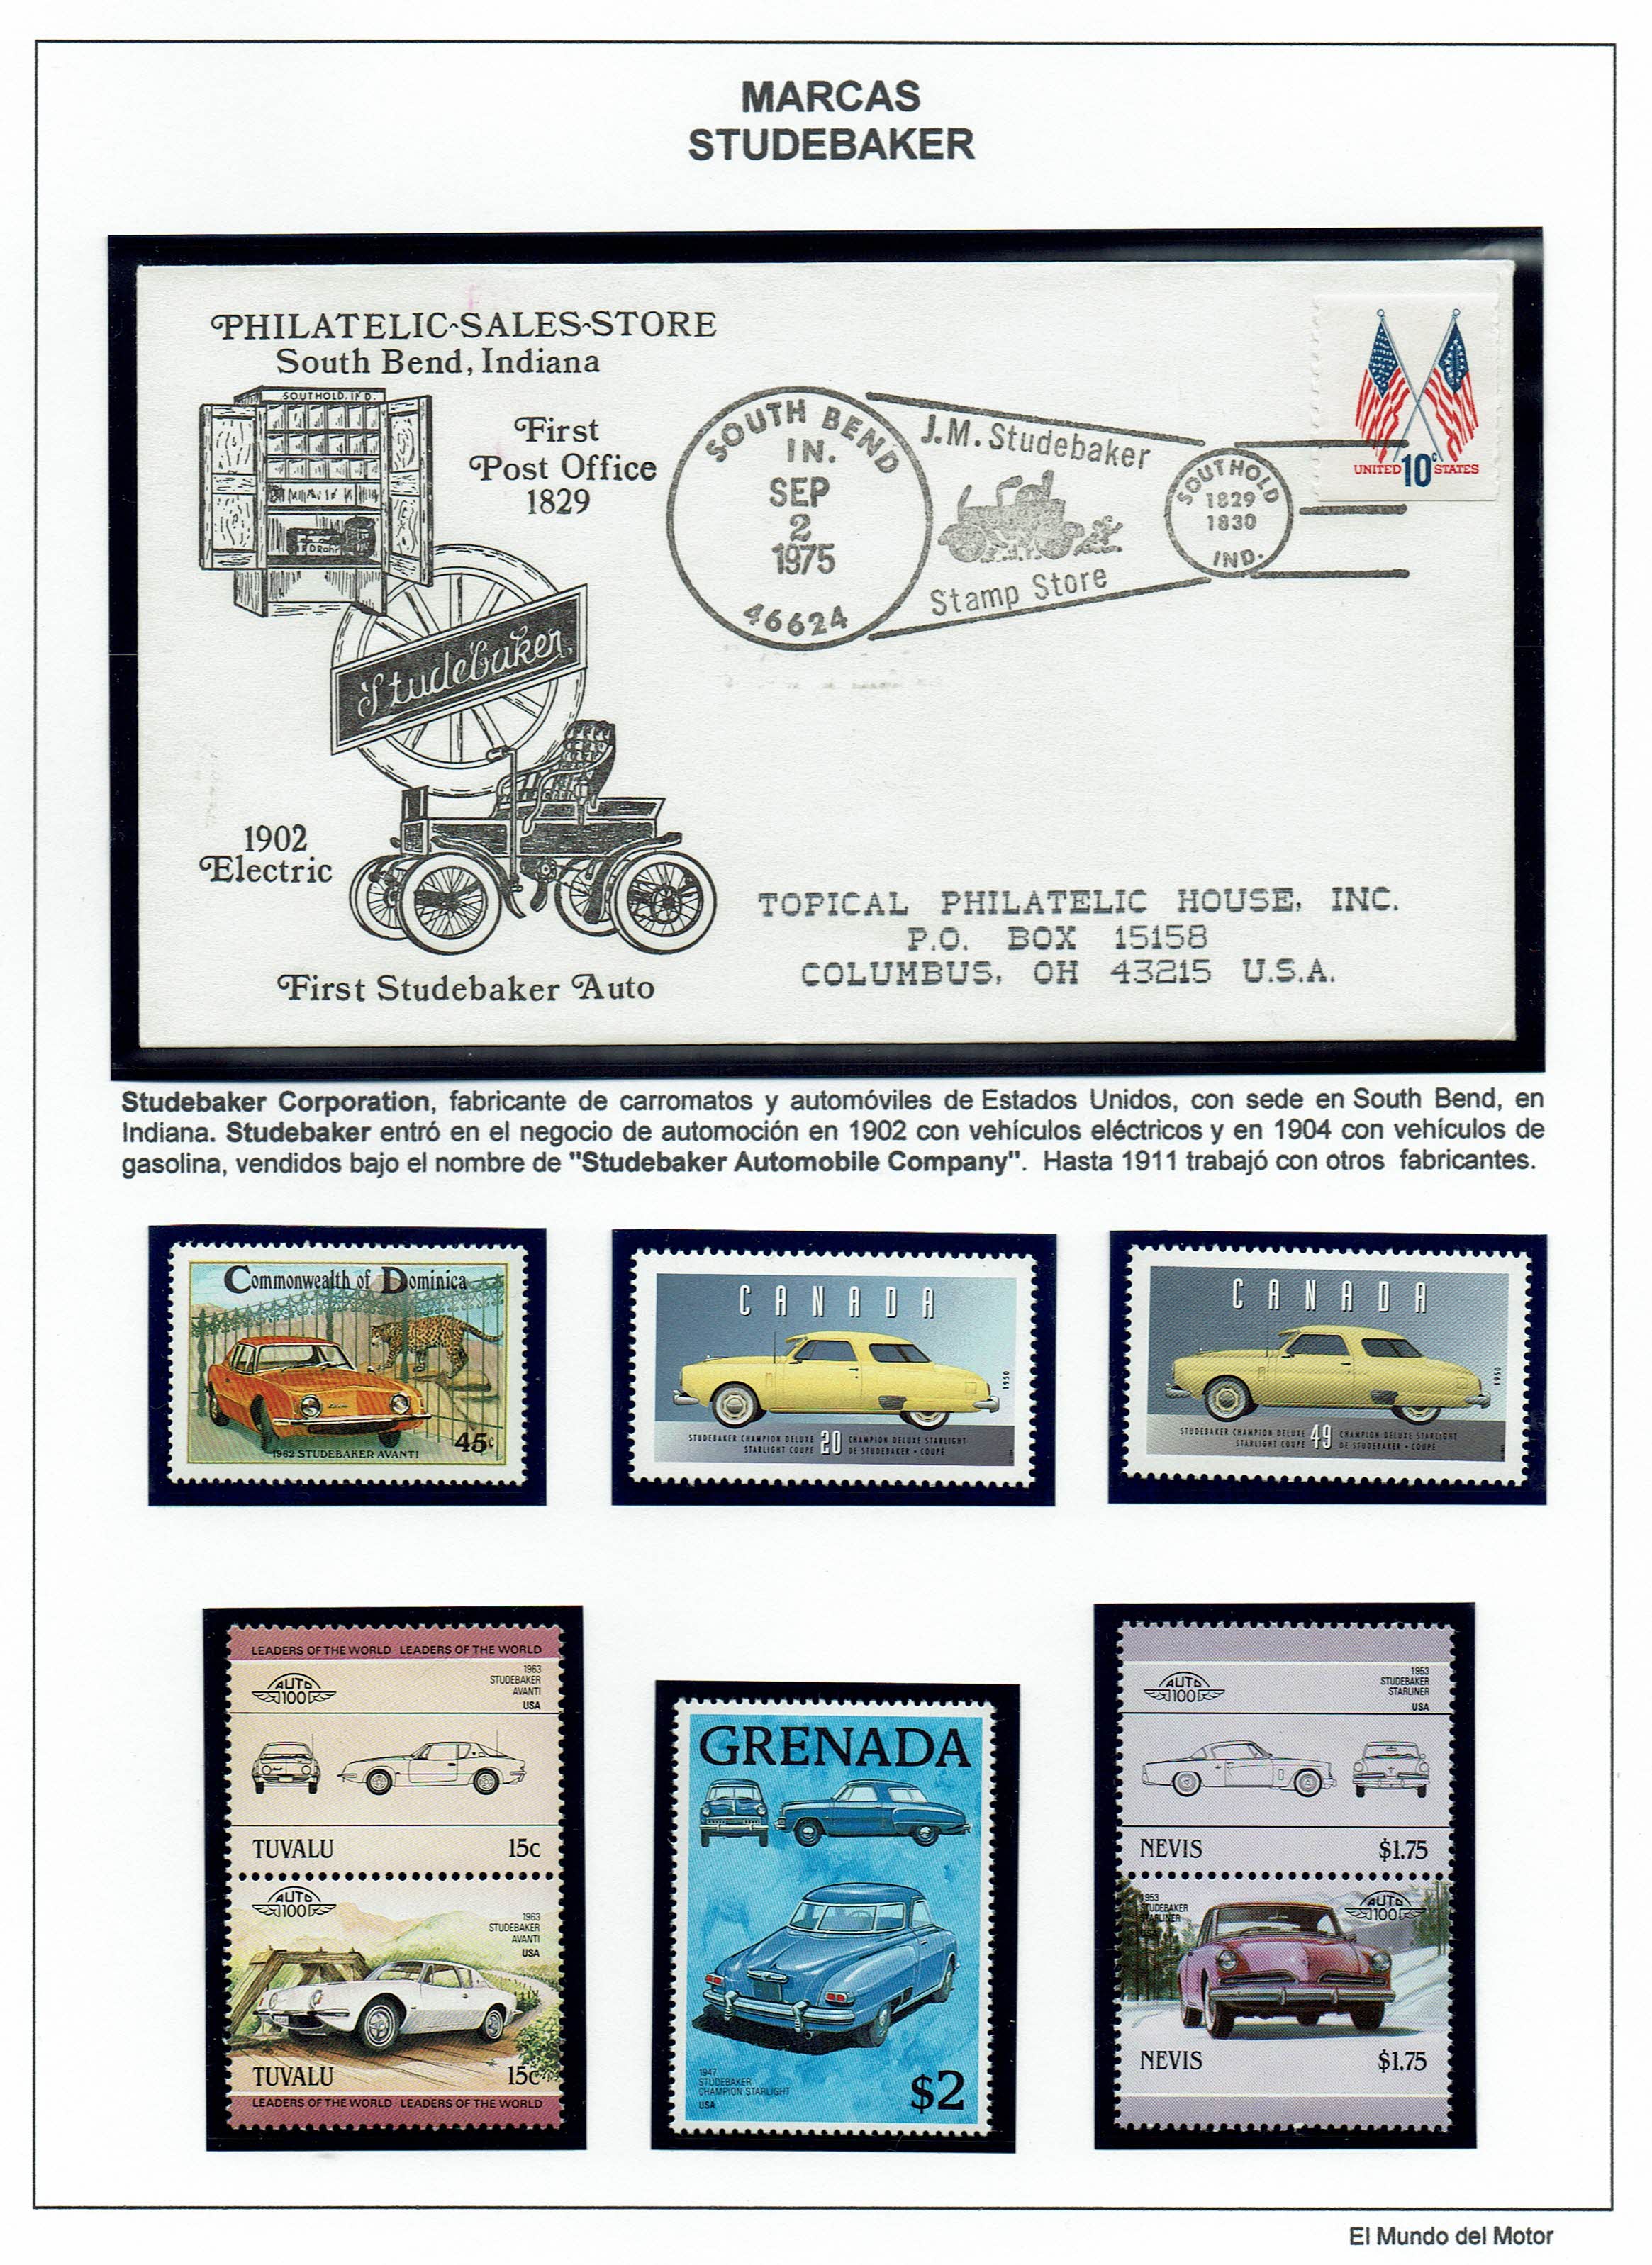 Studebaker Automobile Company